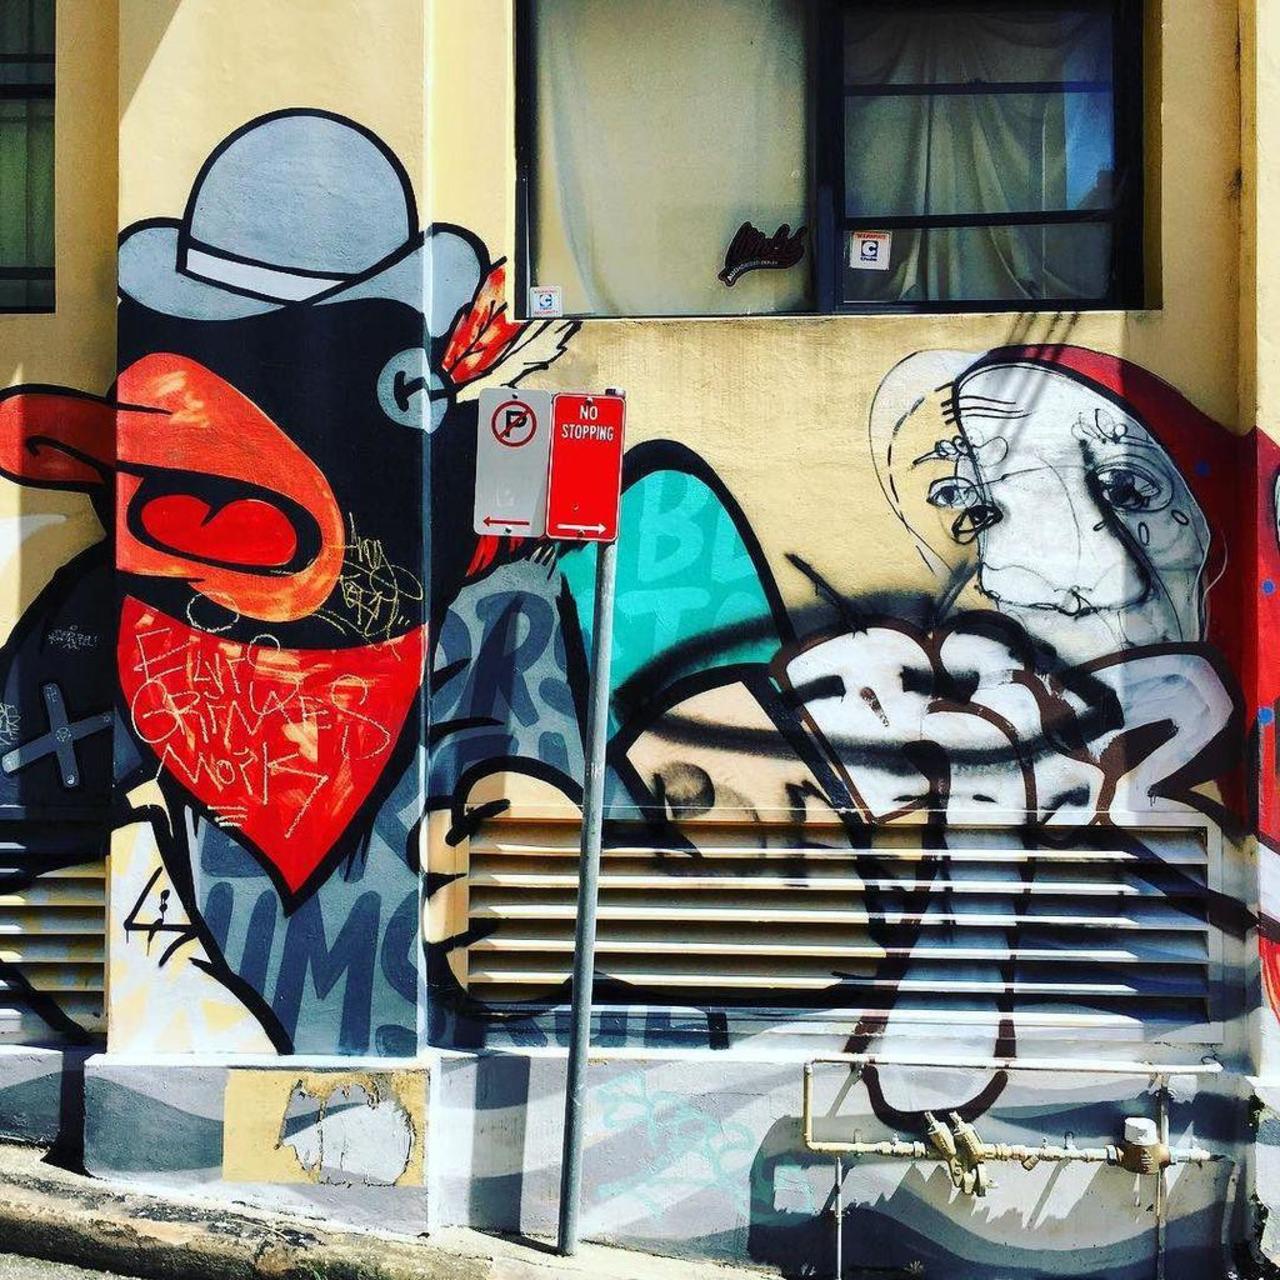 #streetart #graffiti #art #darlo #darlinghurst  #sydney #publicart #artofinsta http://ift.tt/1RhI24K http://t.co/QHa1bzC3Oi